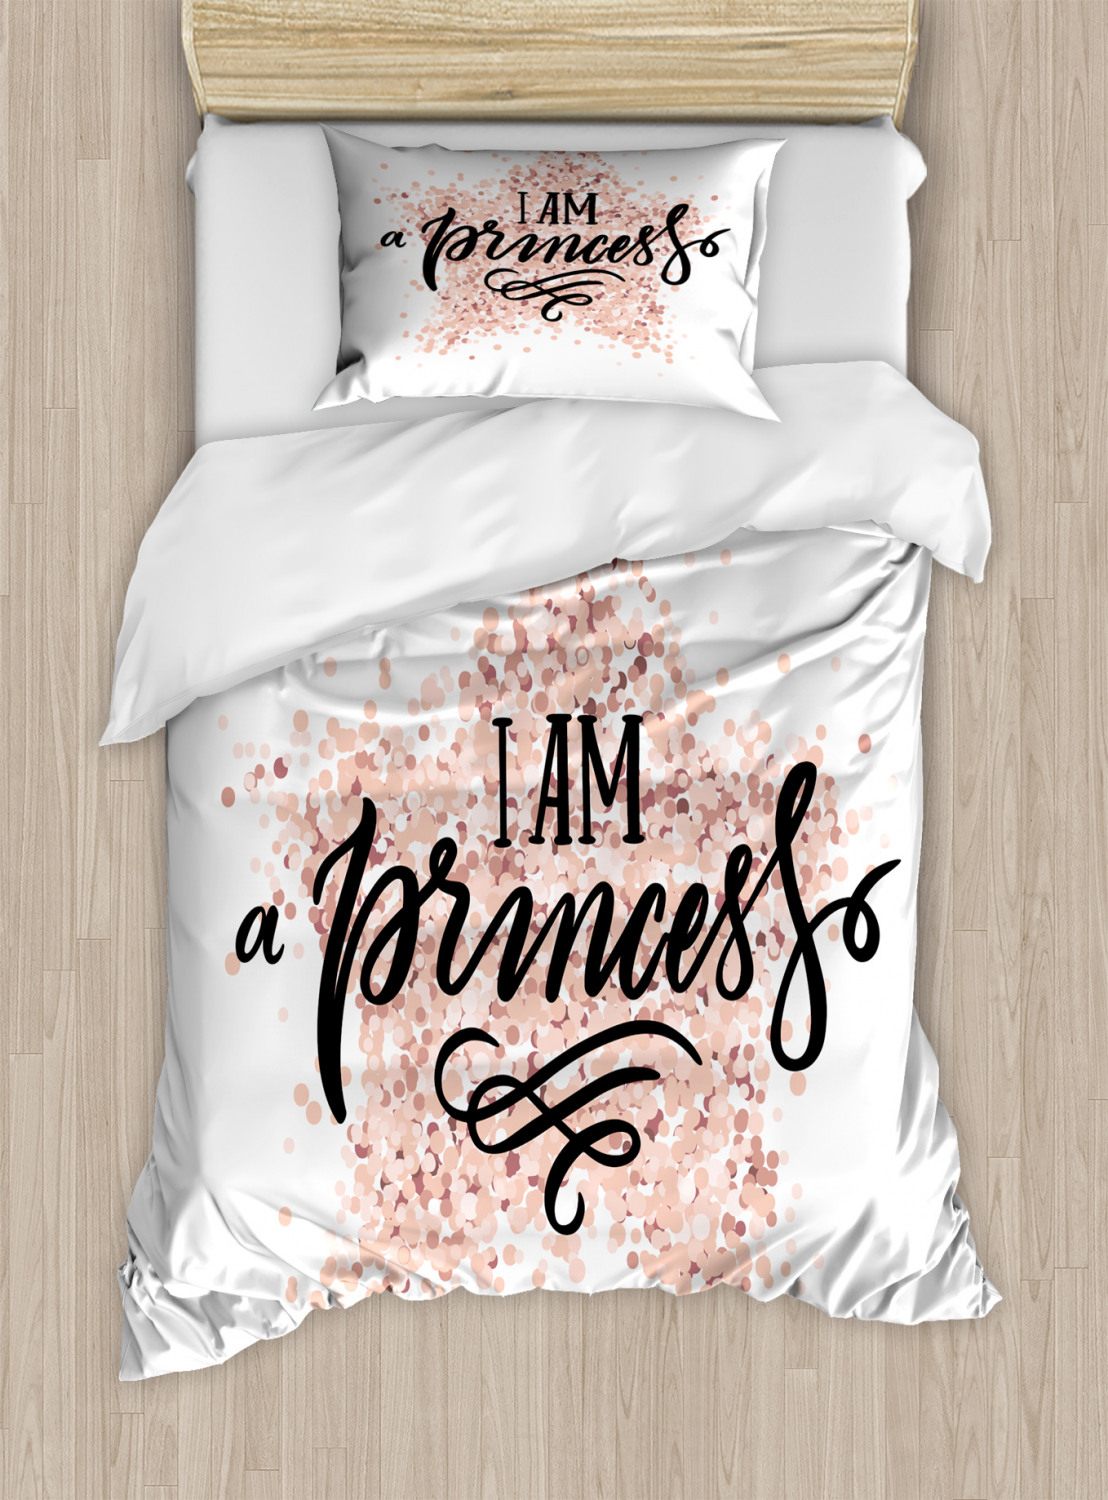 I am a Princess Quilted Bedspread & Pillow Shams Set Modern Dotted Print 